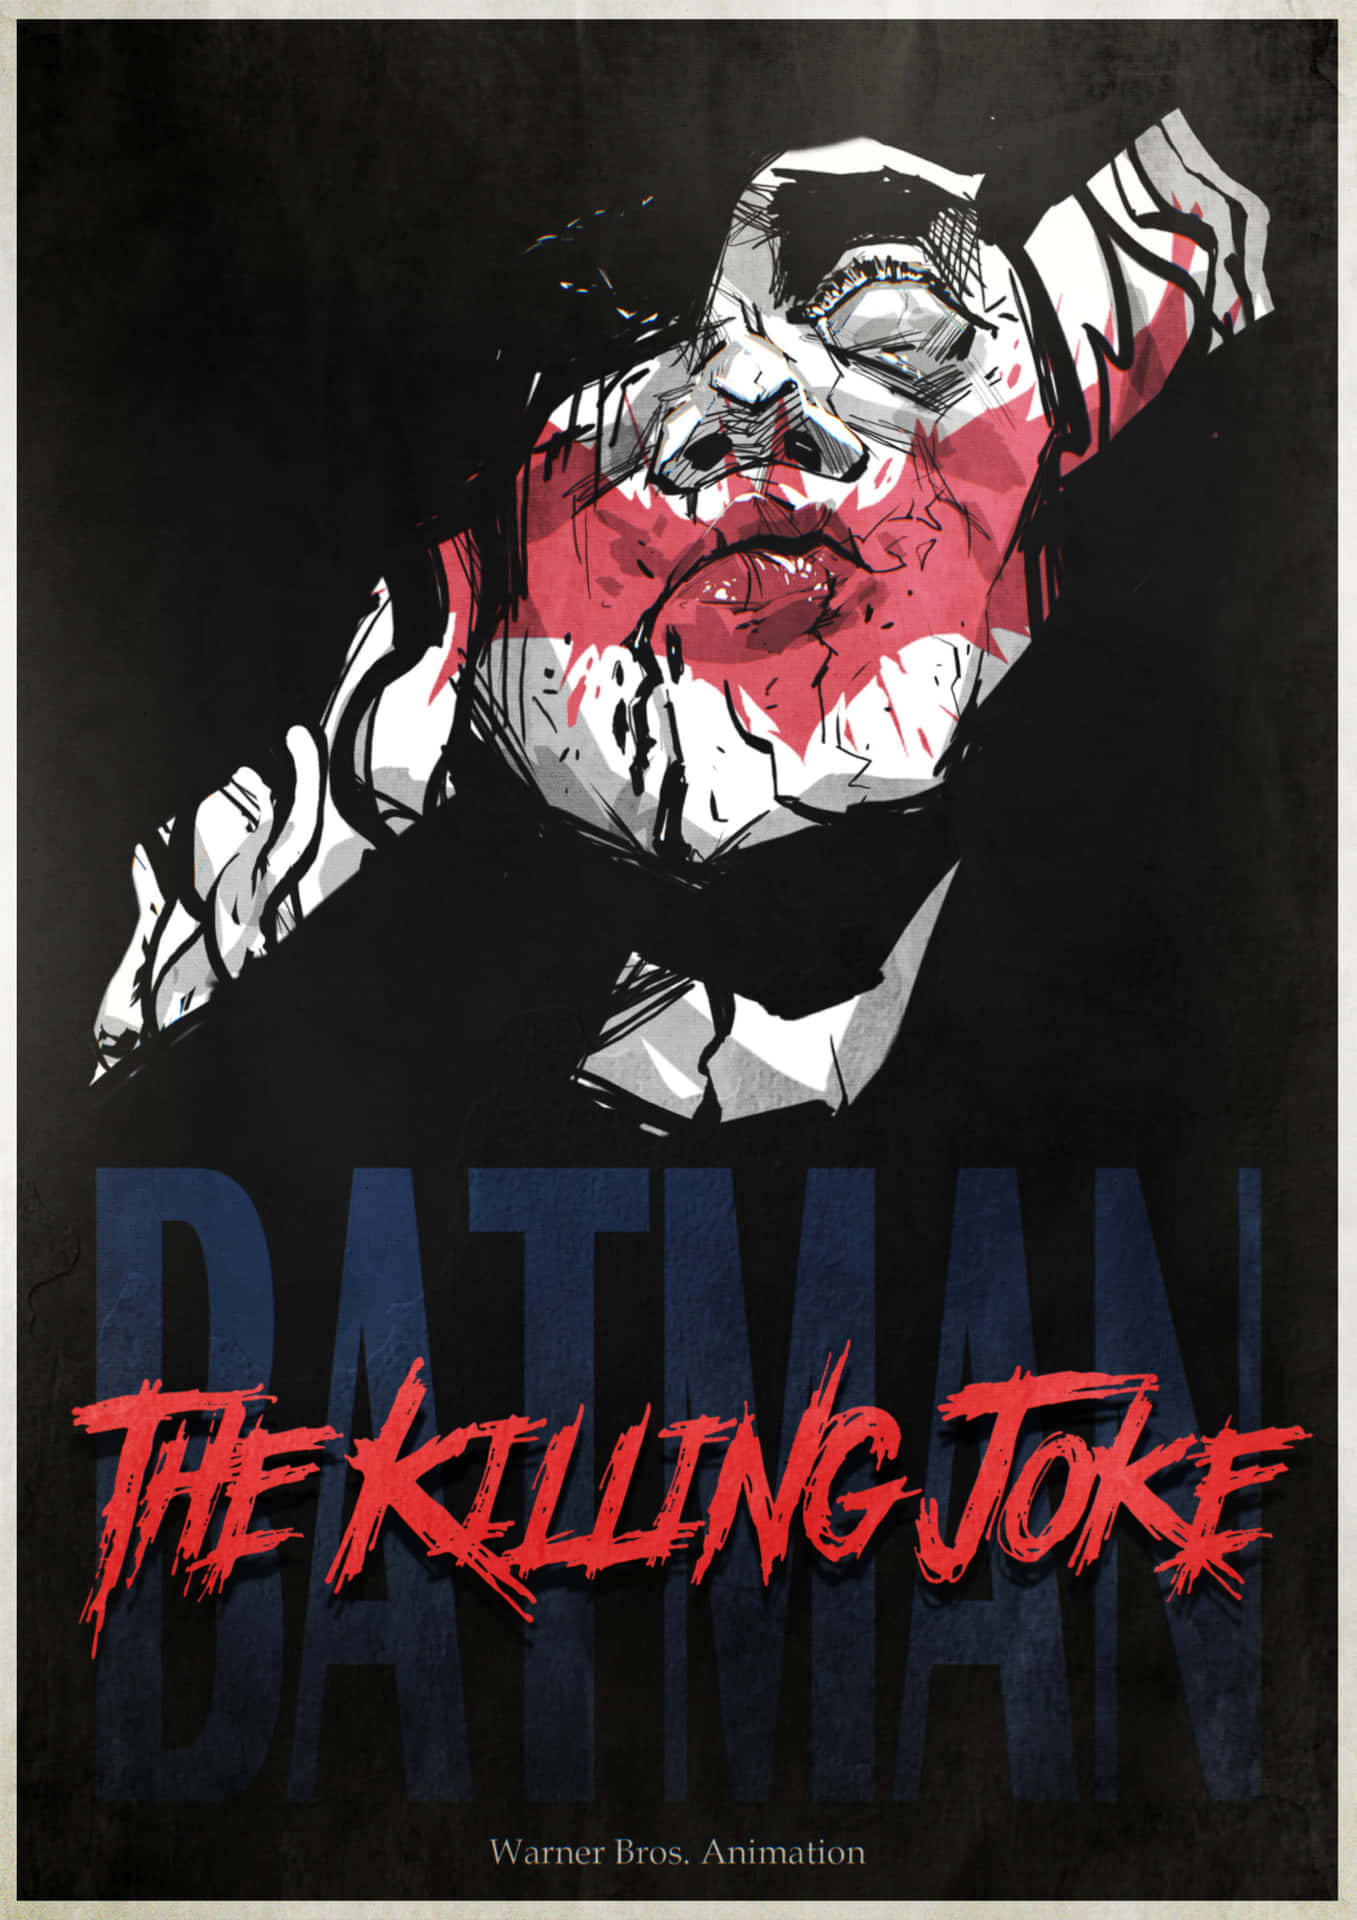 Batman and the Joker in a tense moment from The Killing Joke Wallpaper